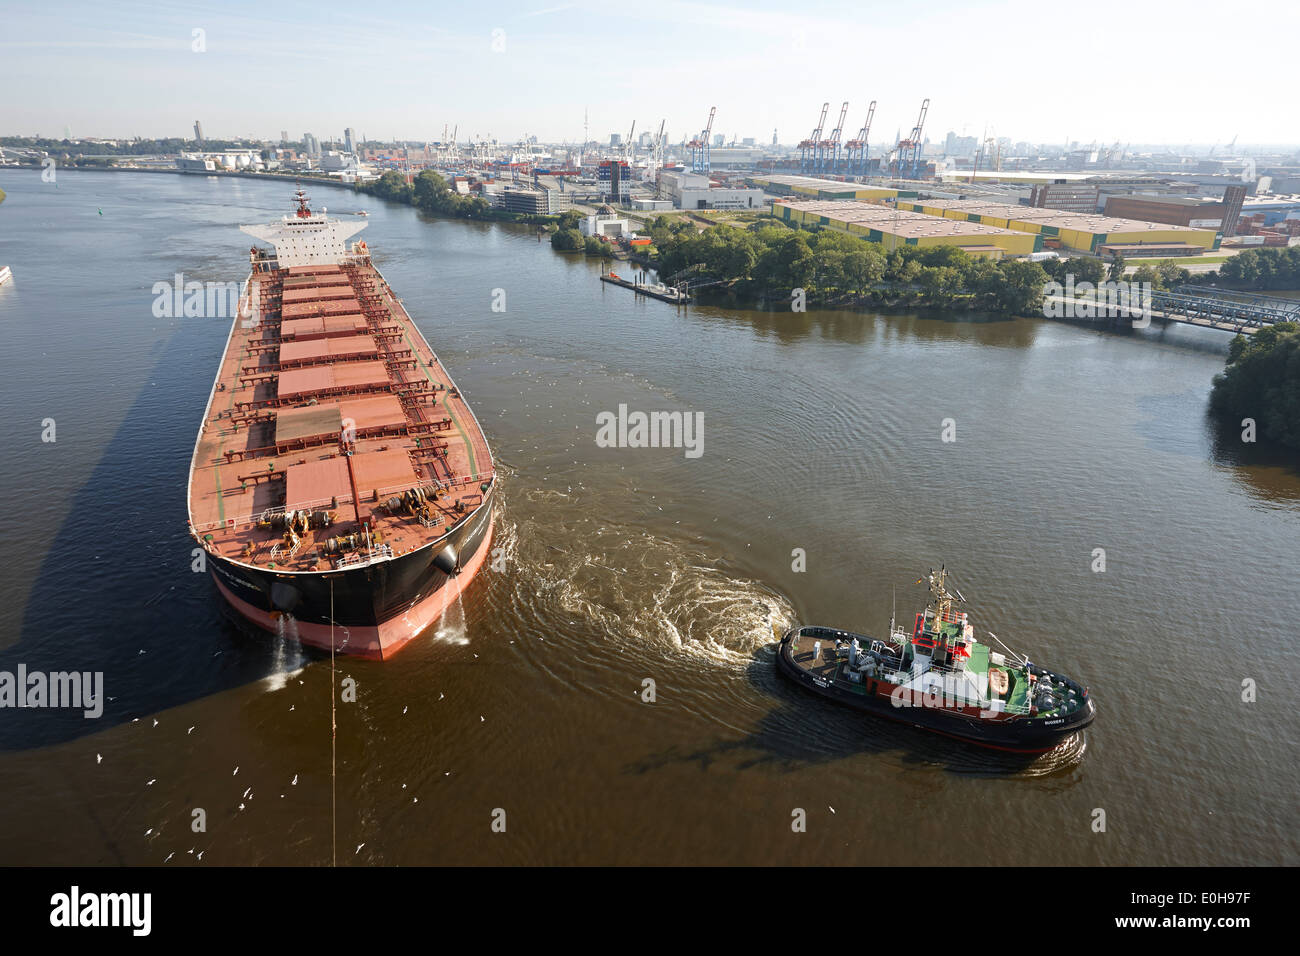 Tanker with tug boats on the river Elbe near Waltershof, Hamburg, Germany Stock Photo